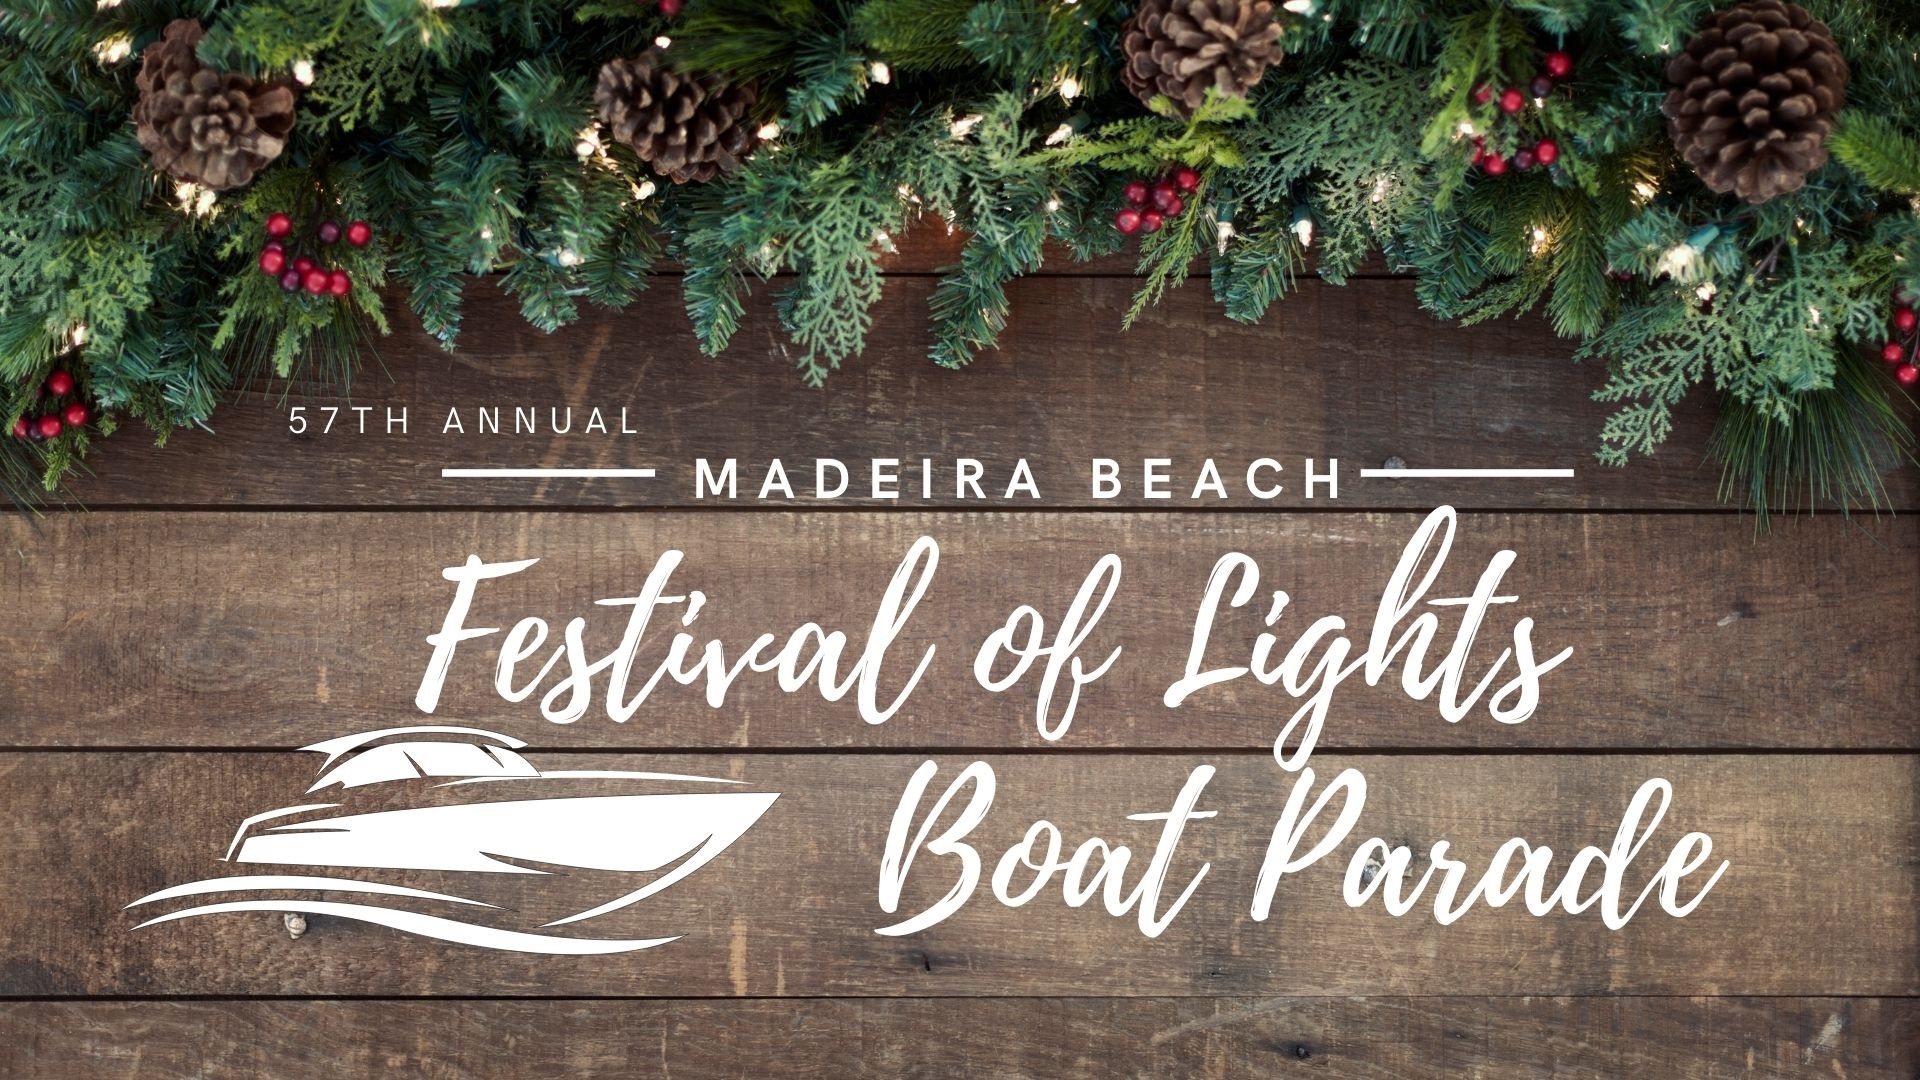 Festival of Lights Holiday Boat Parade Madeira Beach, FL